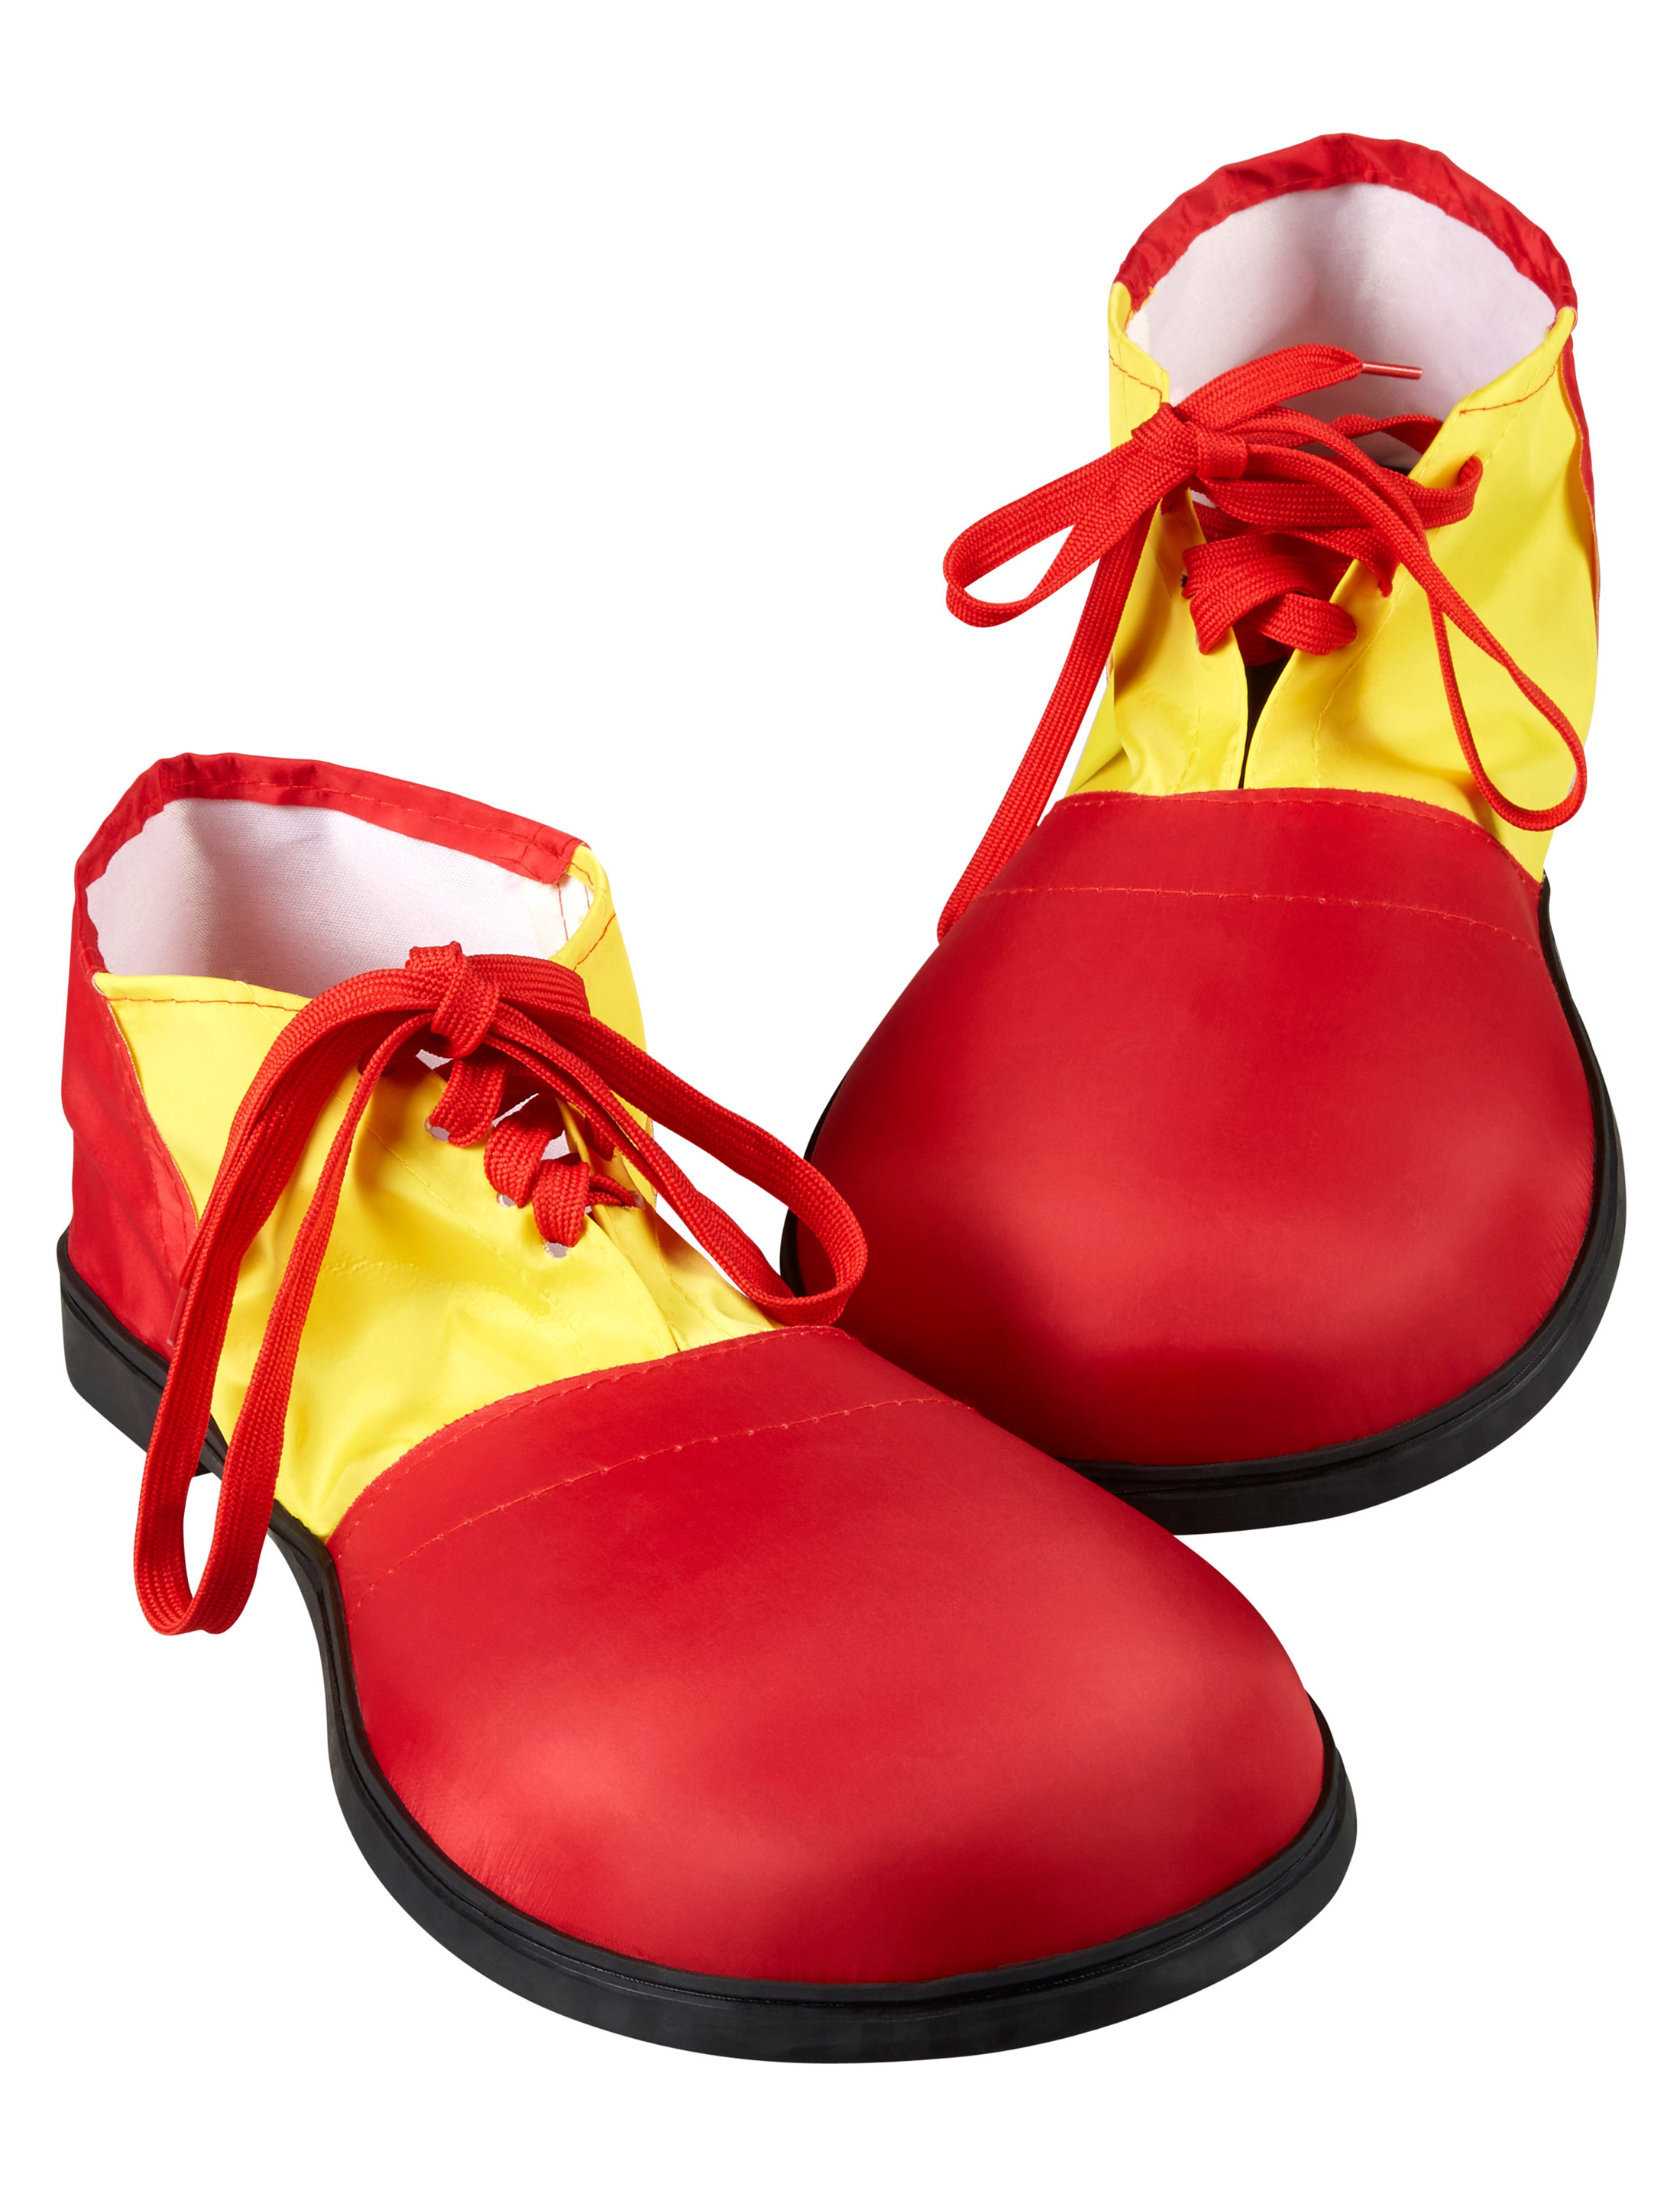 Clown-Schuhe Erwachsene rot